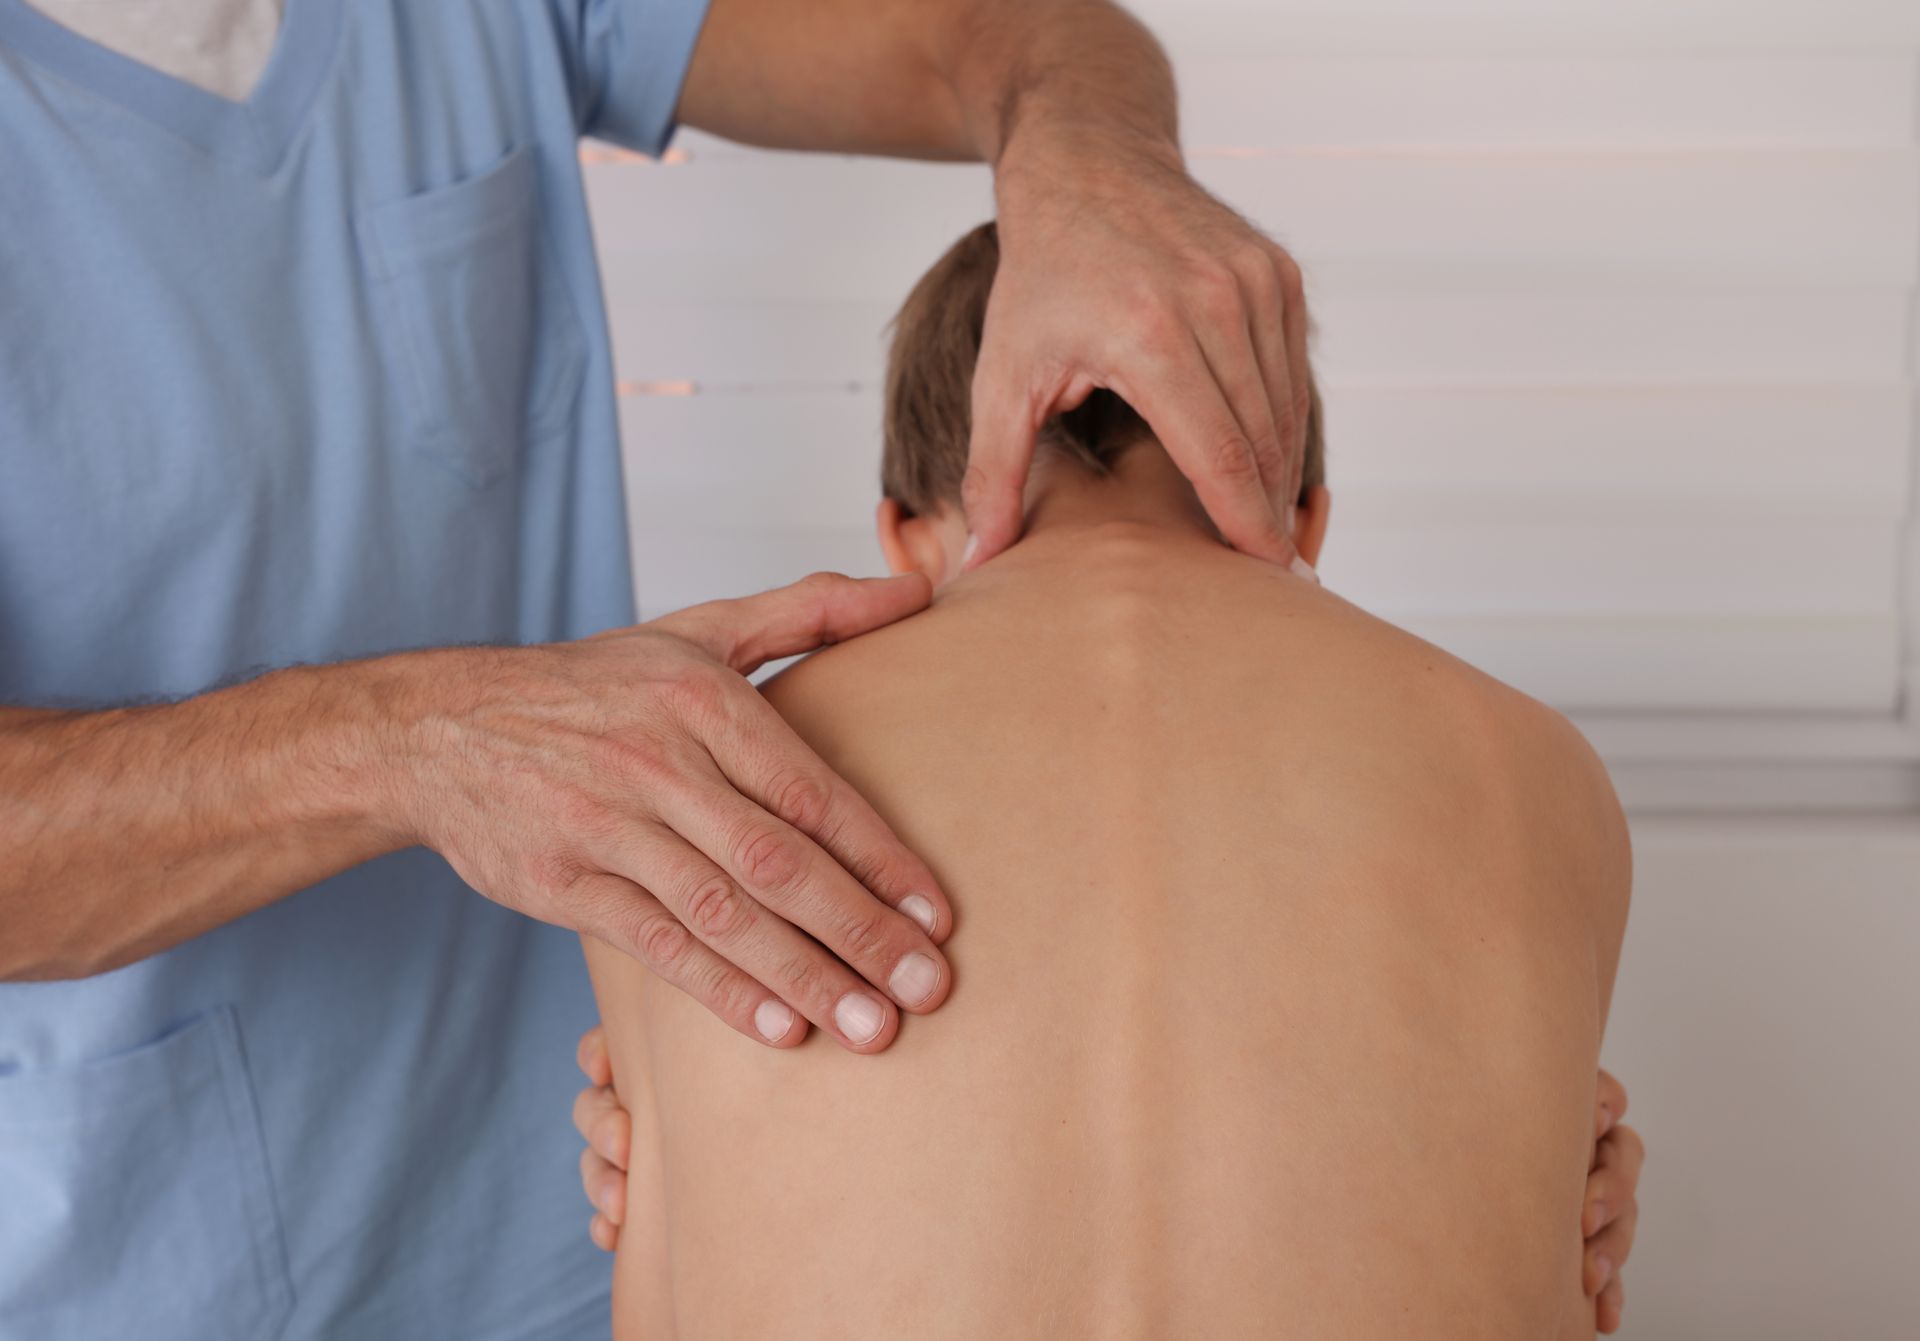 Masseur treats a patient by sports injury massage